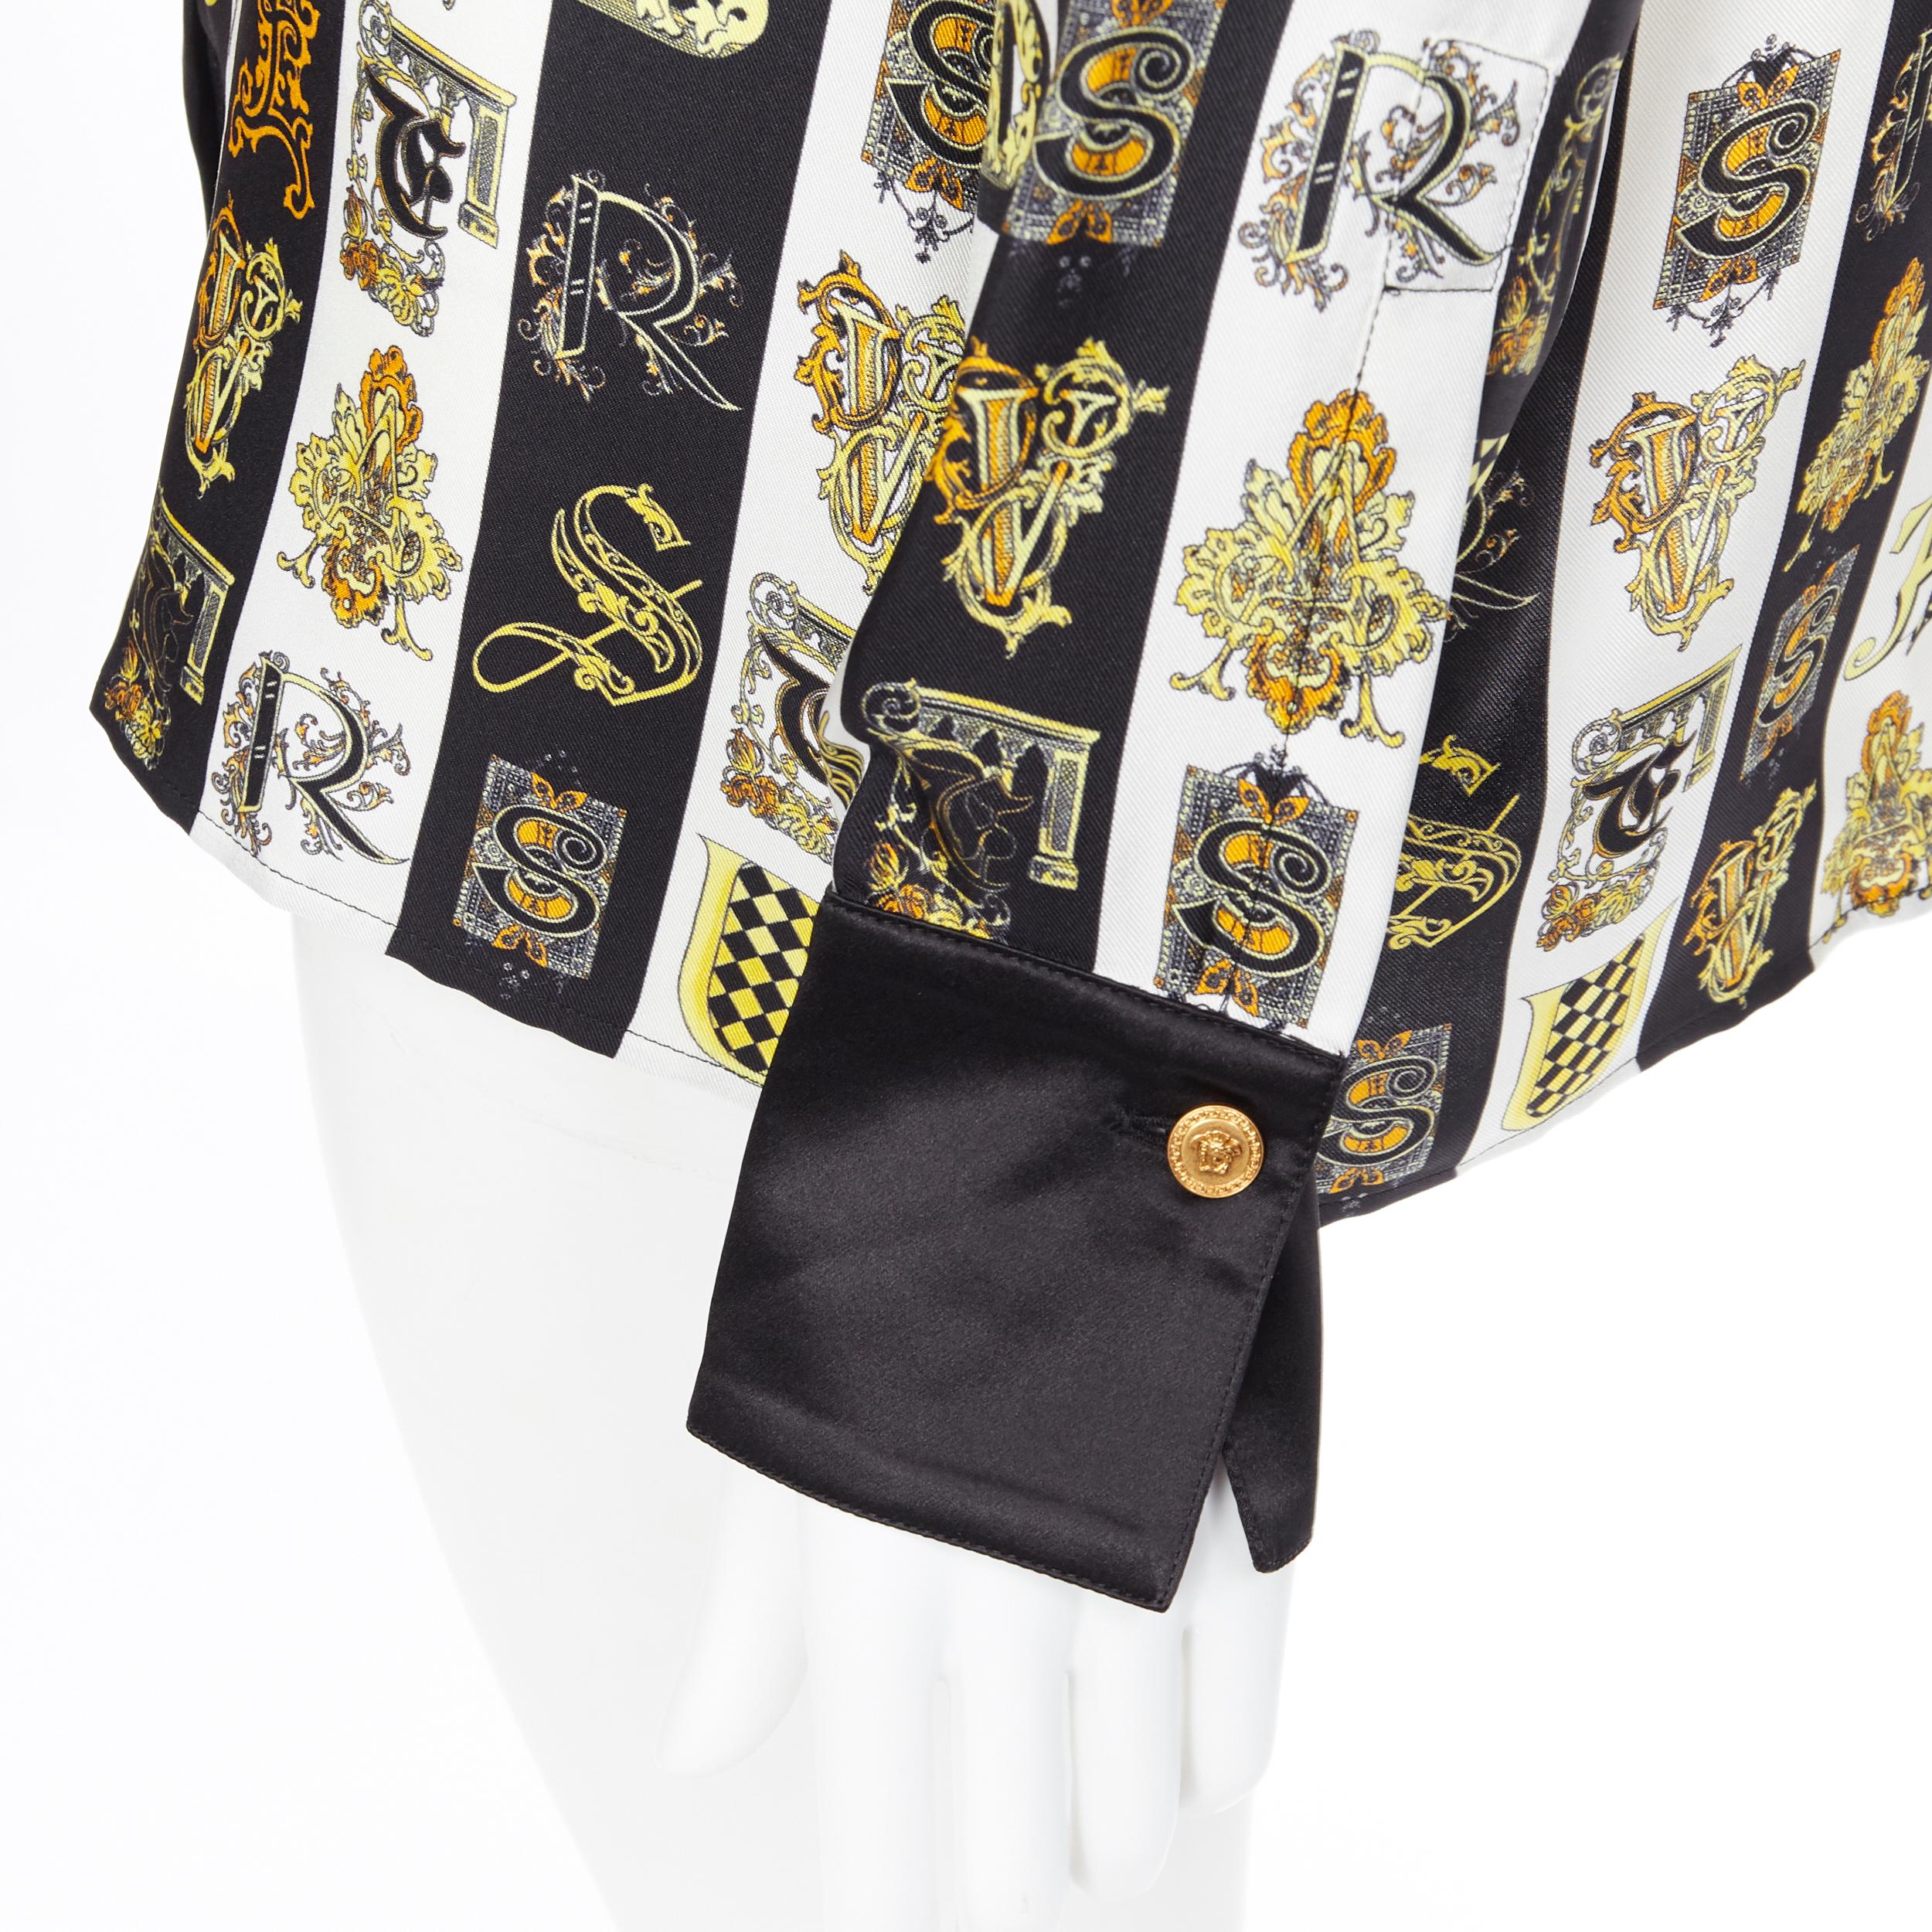 new VERSACE 100% silk gold black Hibiscus Baroque Virtus Alphabet shirt IT44 L
Brand: Versace
Designer: Donatella Versace
Collection: 2019
Model Name / Style: Silk shirt
Material: Silk
Color: Gold, black
Pattern: Floral
Closure: Button
Extra Detail: